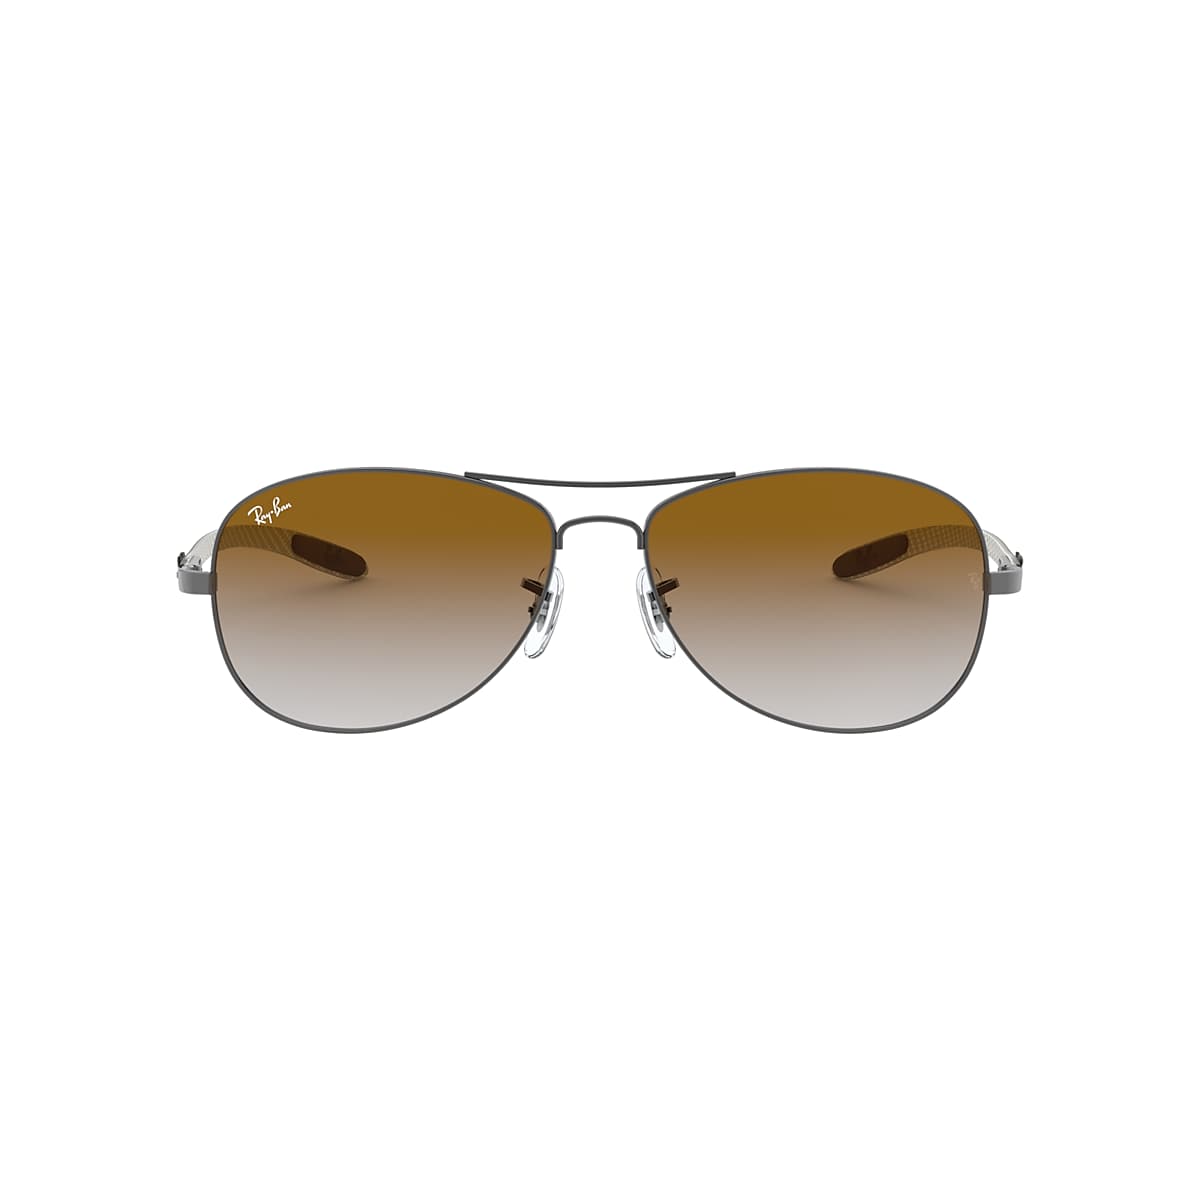 RAY-BAN RB8301 Gunmetal - Male Sunglasses, Brown Lens